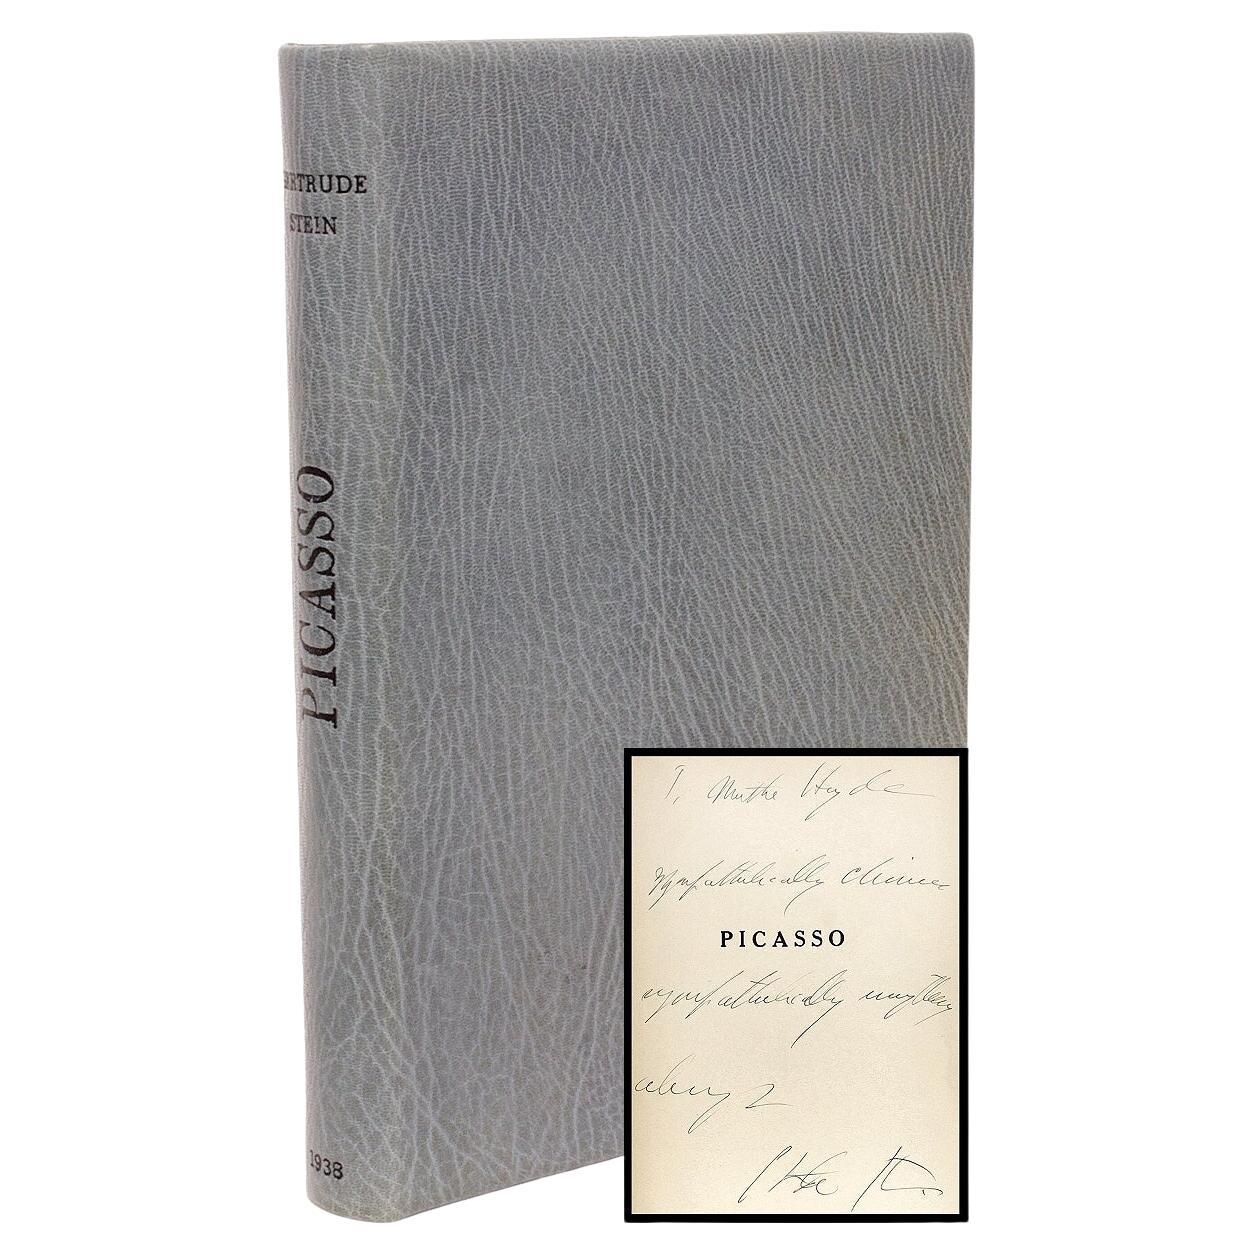 Gertrude Stein Anciens et Modernes Picasso, First Edition Presentation Copy 1938